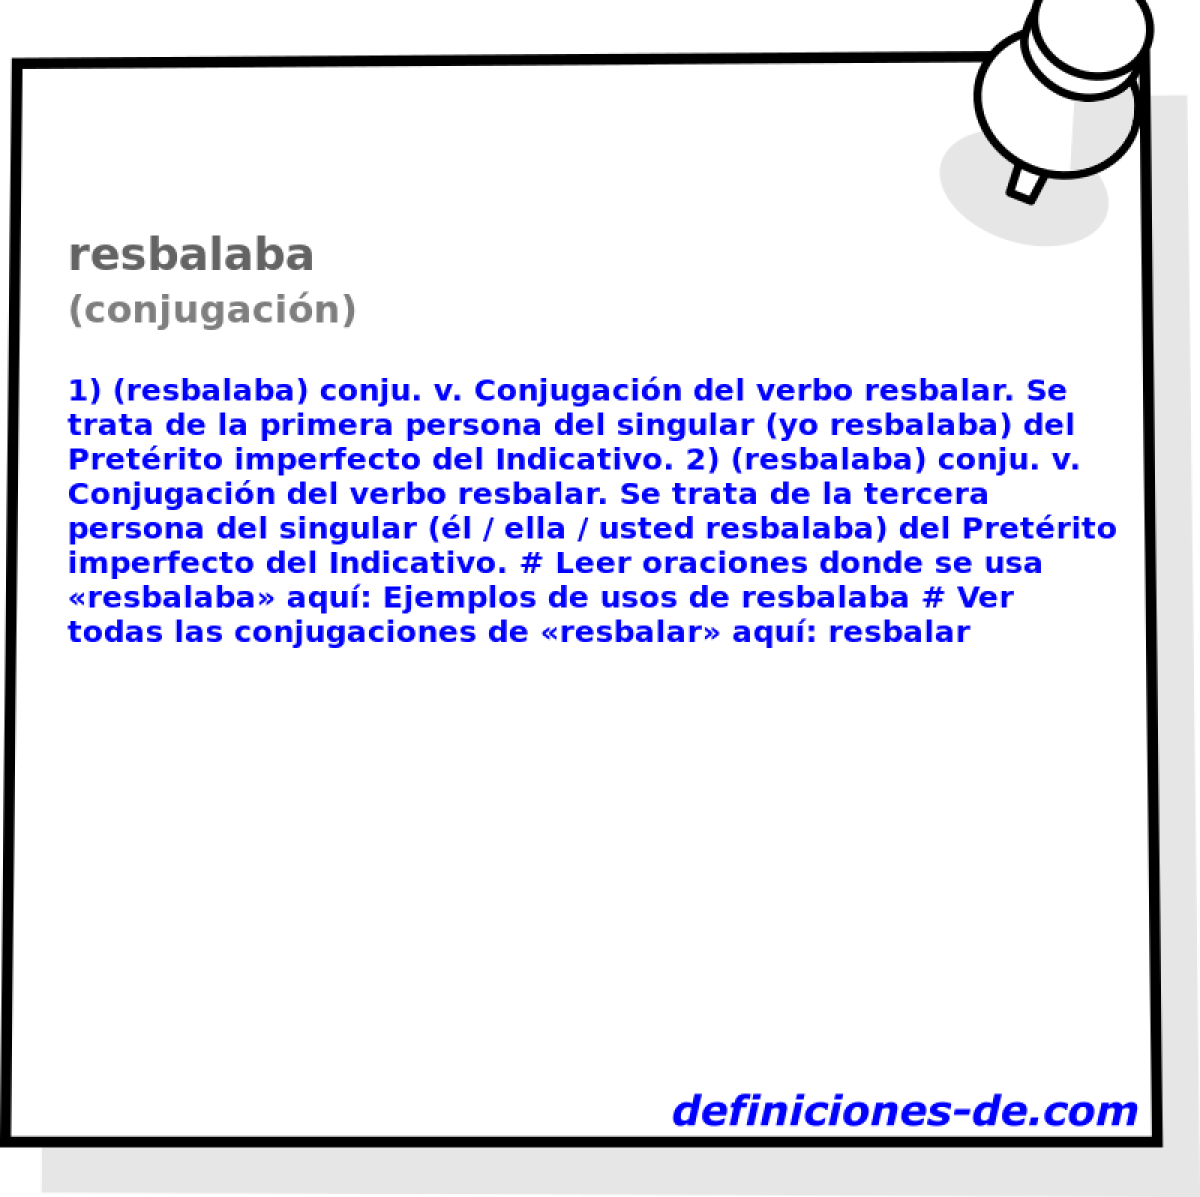 resbalaba (conjugacin)